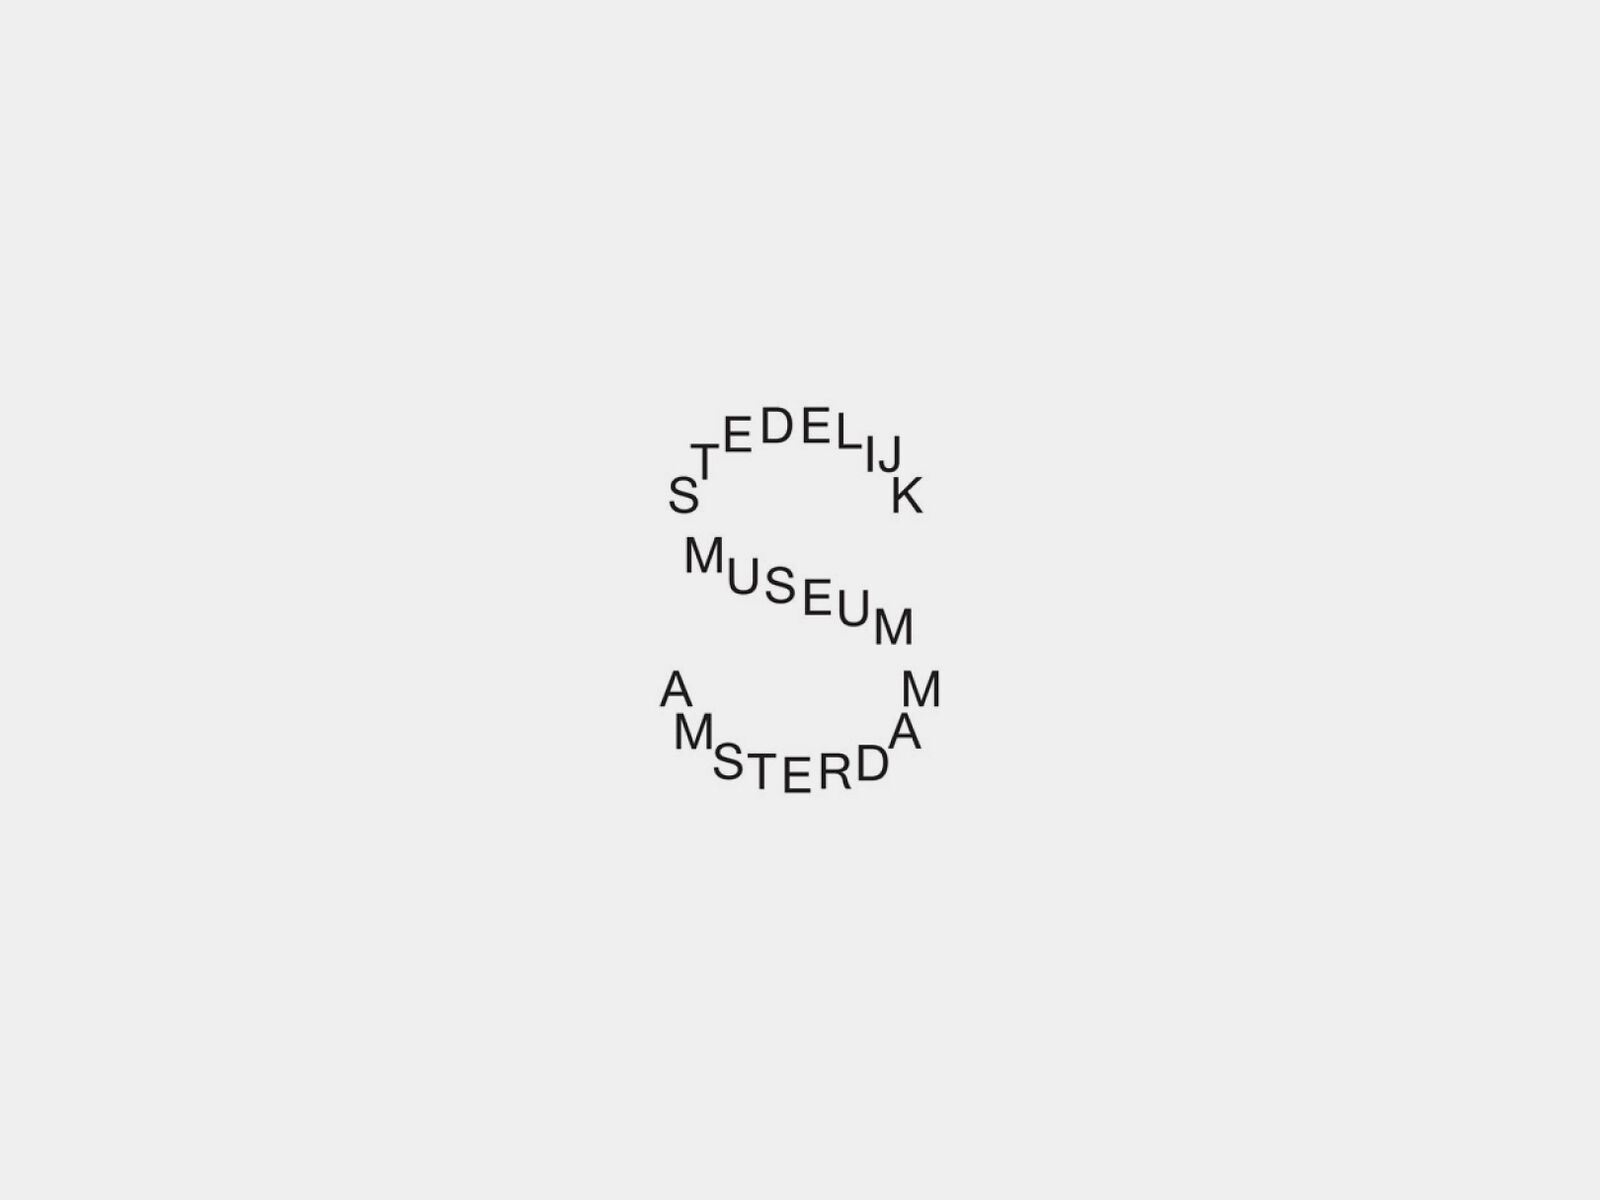 FLOS_Museum-Exhibition_Stedelijk-Amsterdam